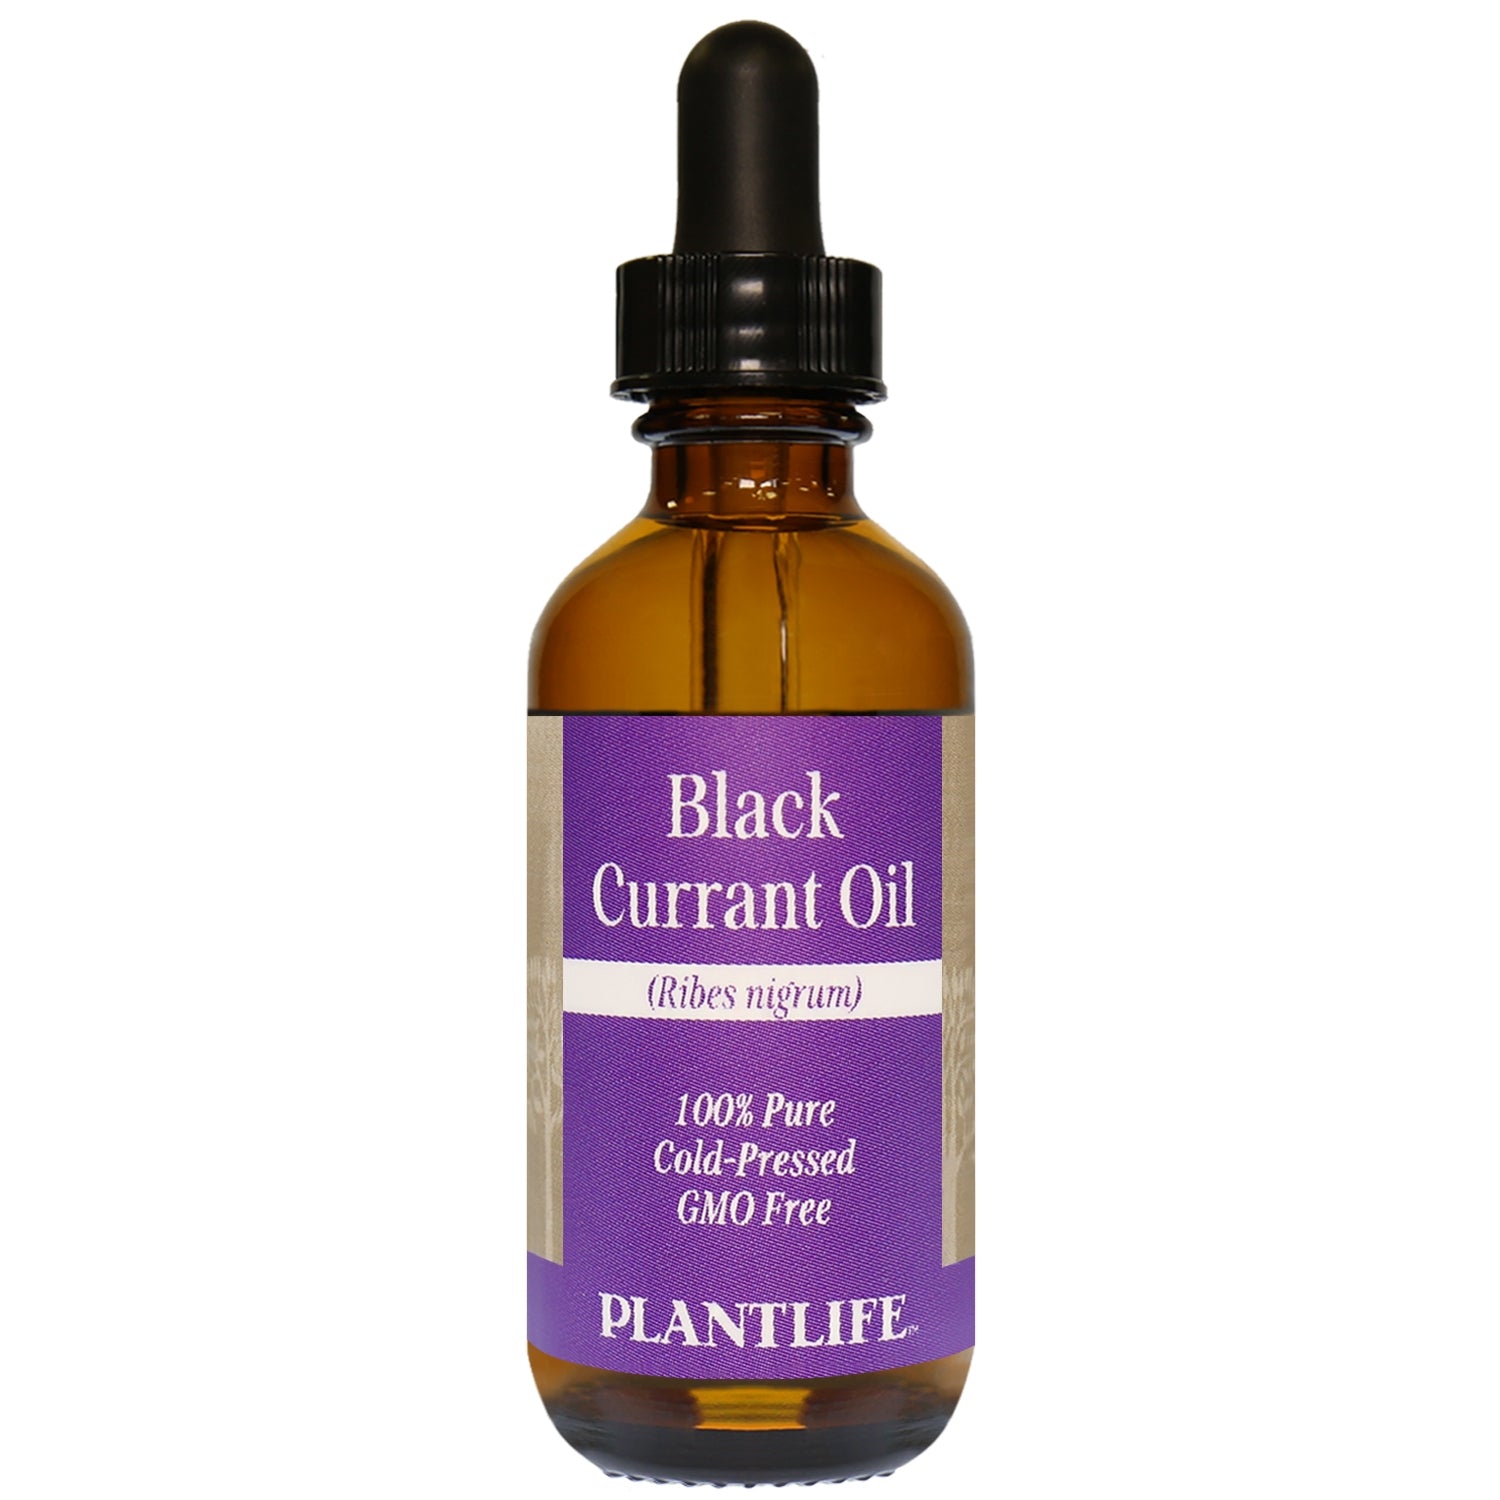 Black currant oil 2oz